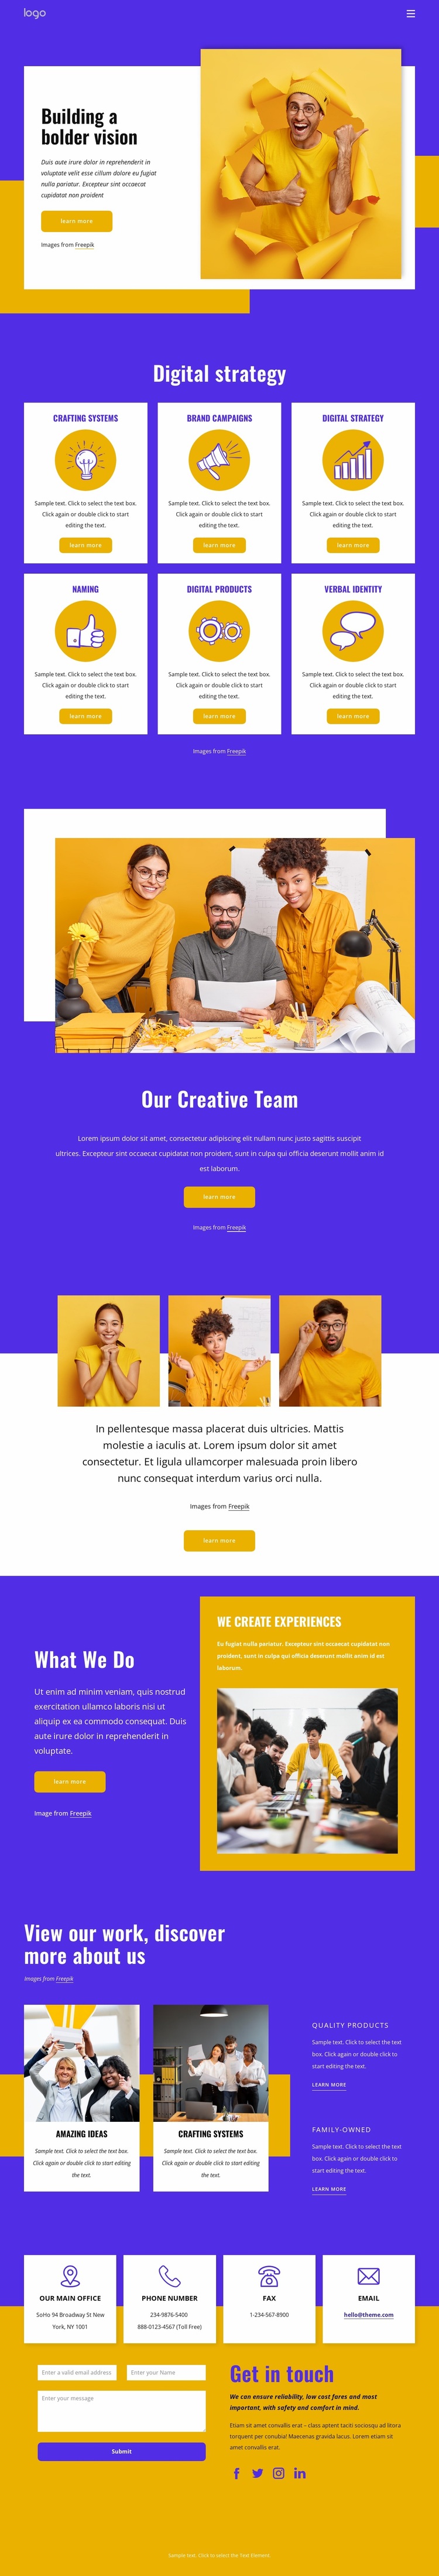 UX design and branding agency Website Design